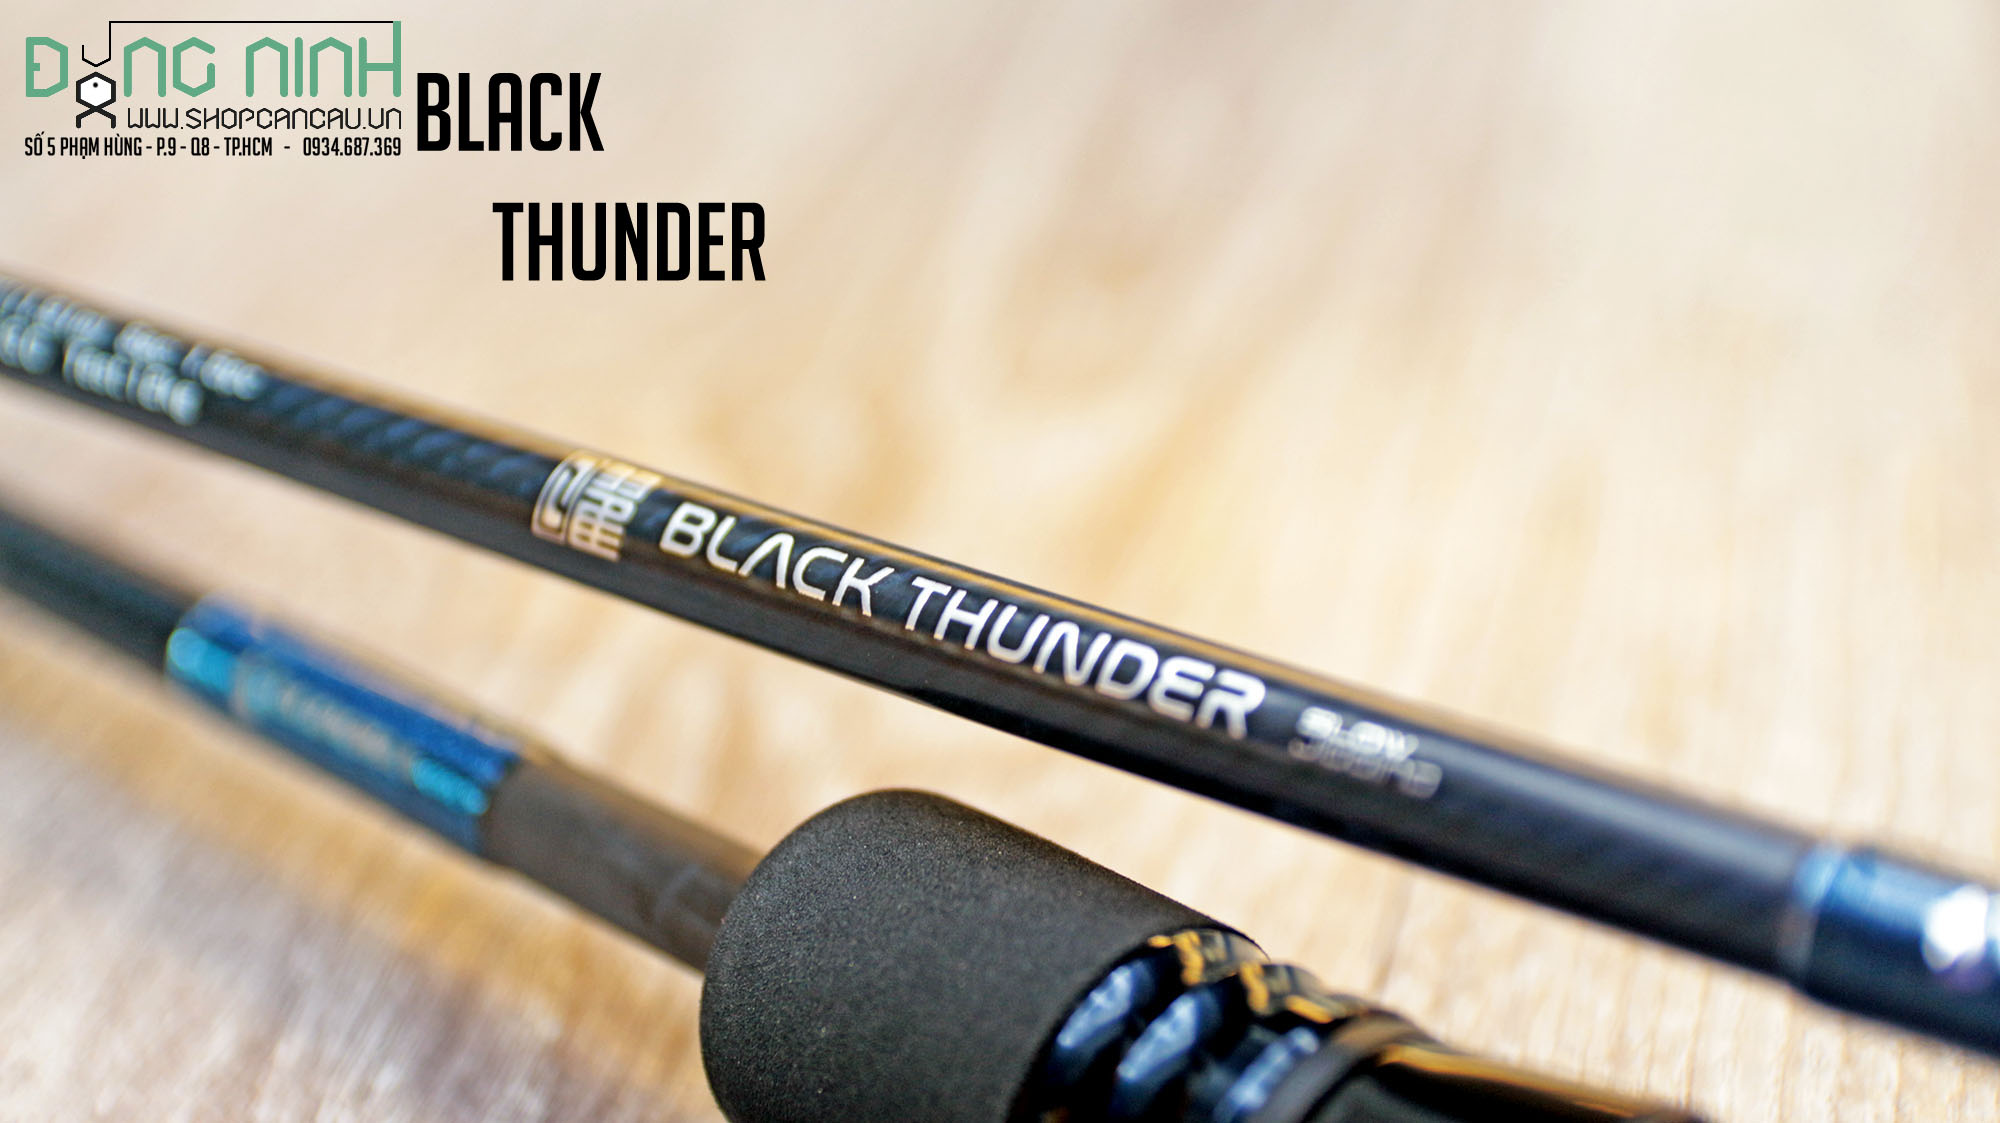 Cần jig Ecooda Black Thunder II - 2024